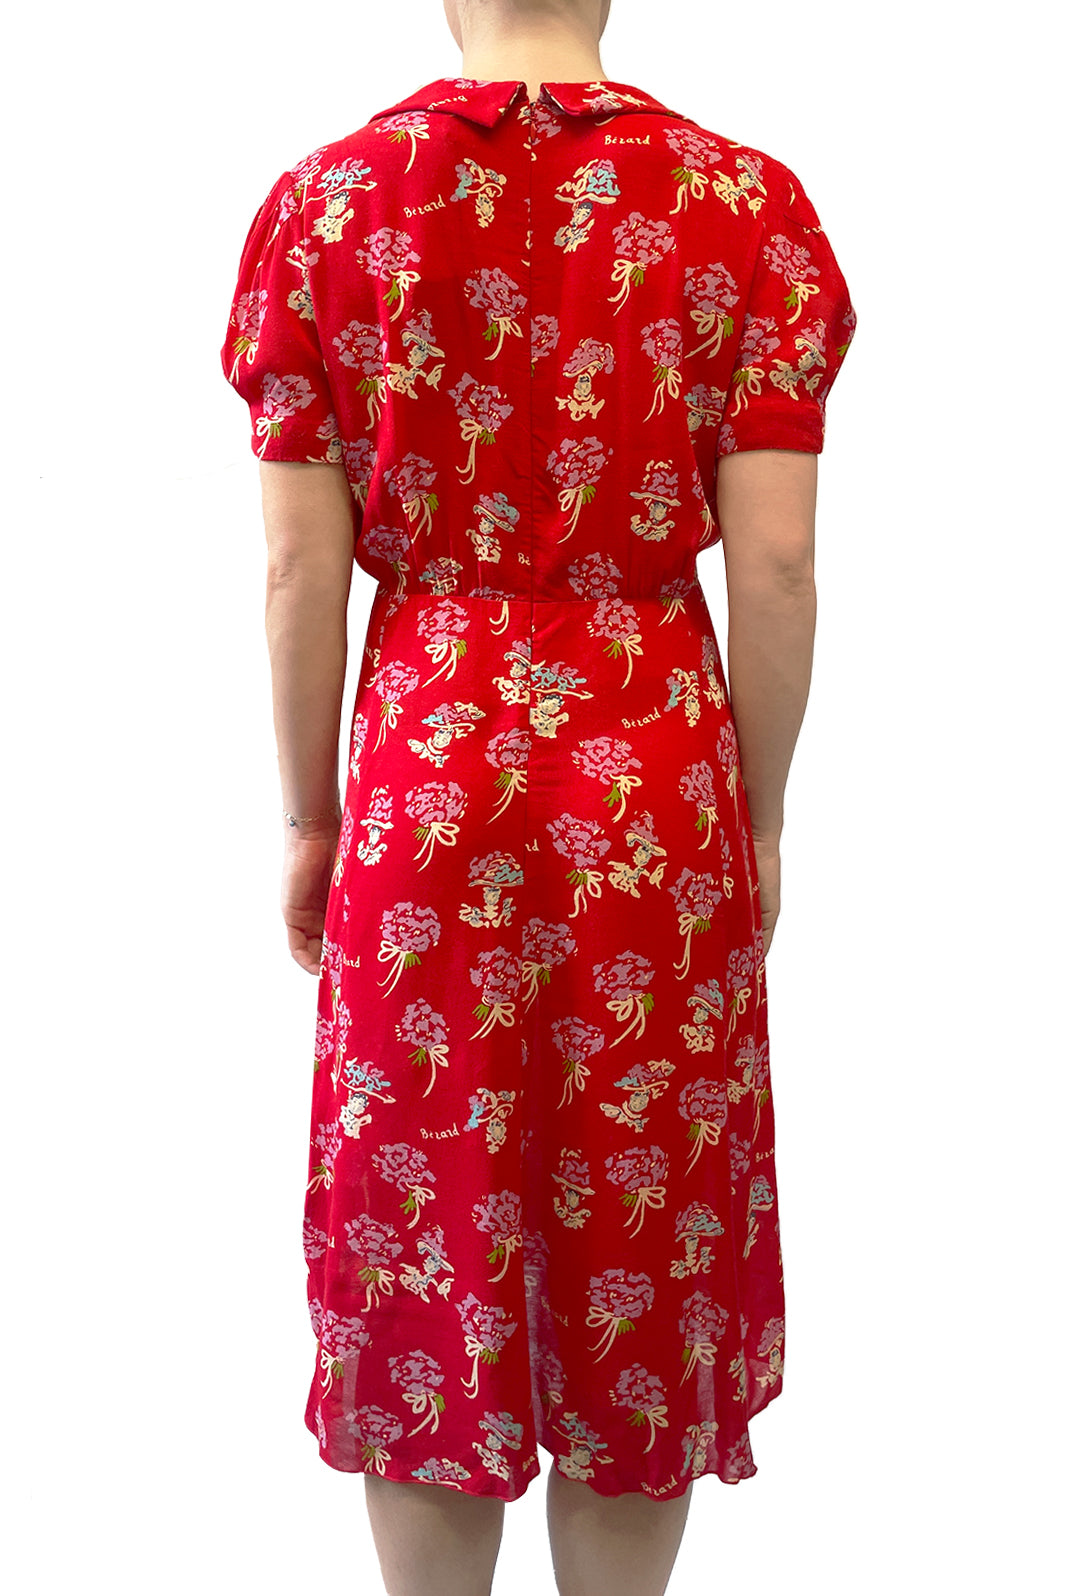 Anna Sui Vintage Spring 1995 Midi Retro Berard Faces Print Dress